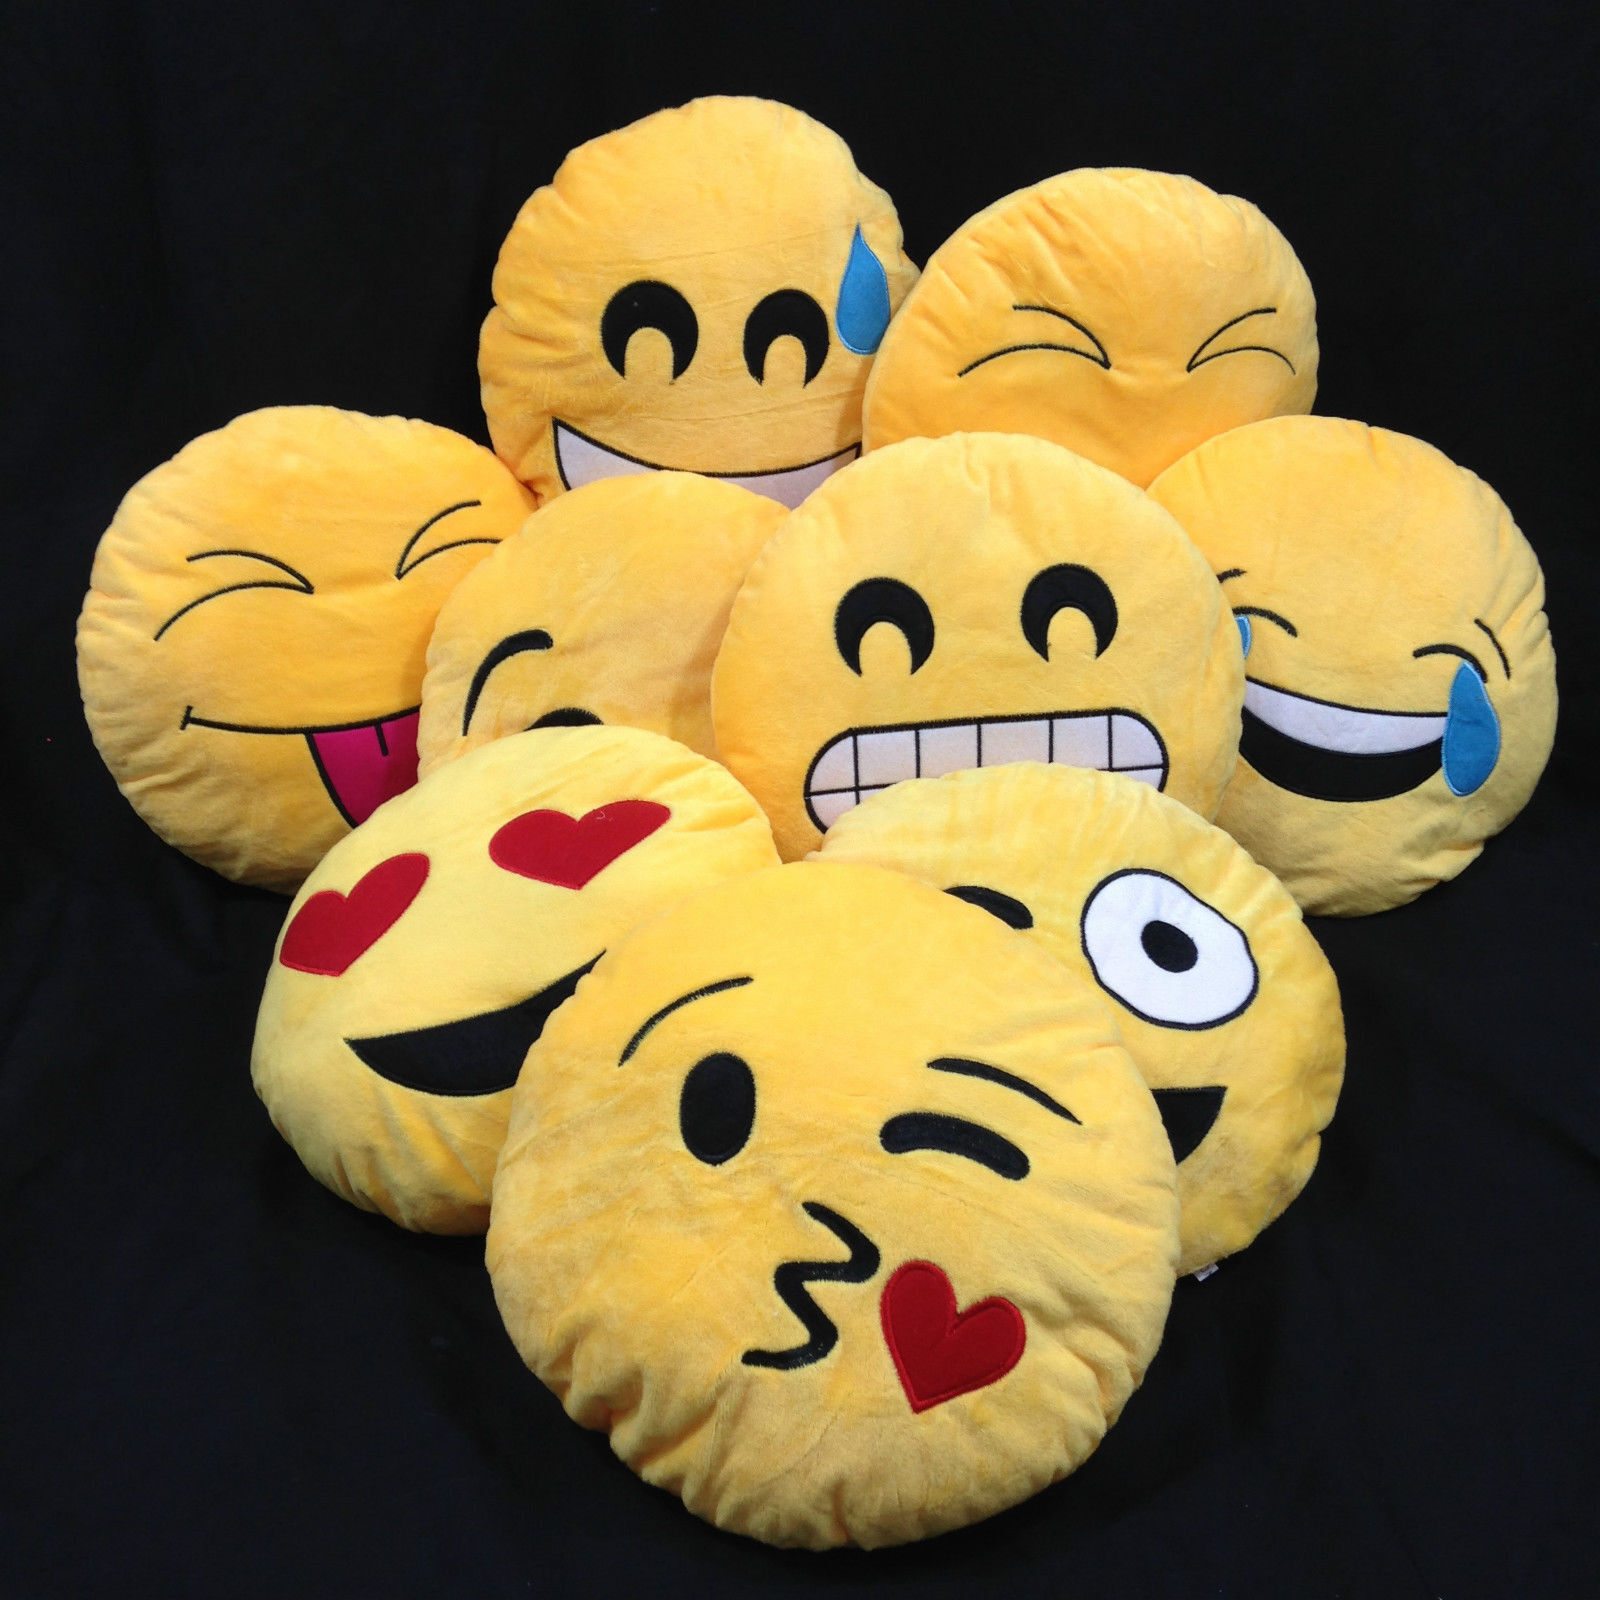 NEW Emoji Emoticon Yellow Round Cushion Soft Toys Pillow Plush